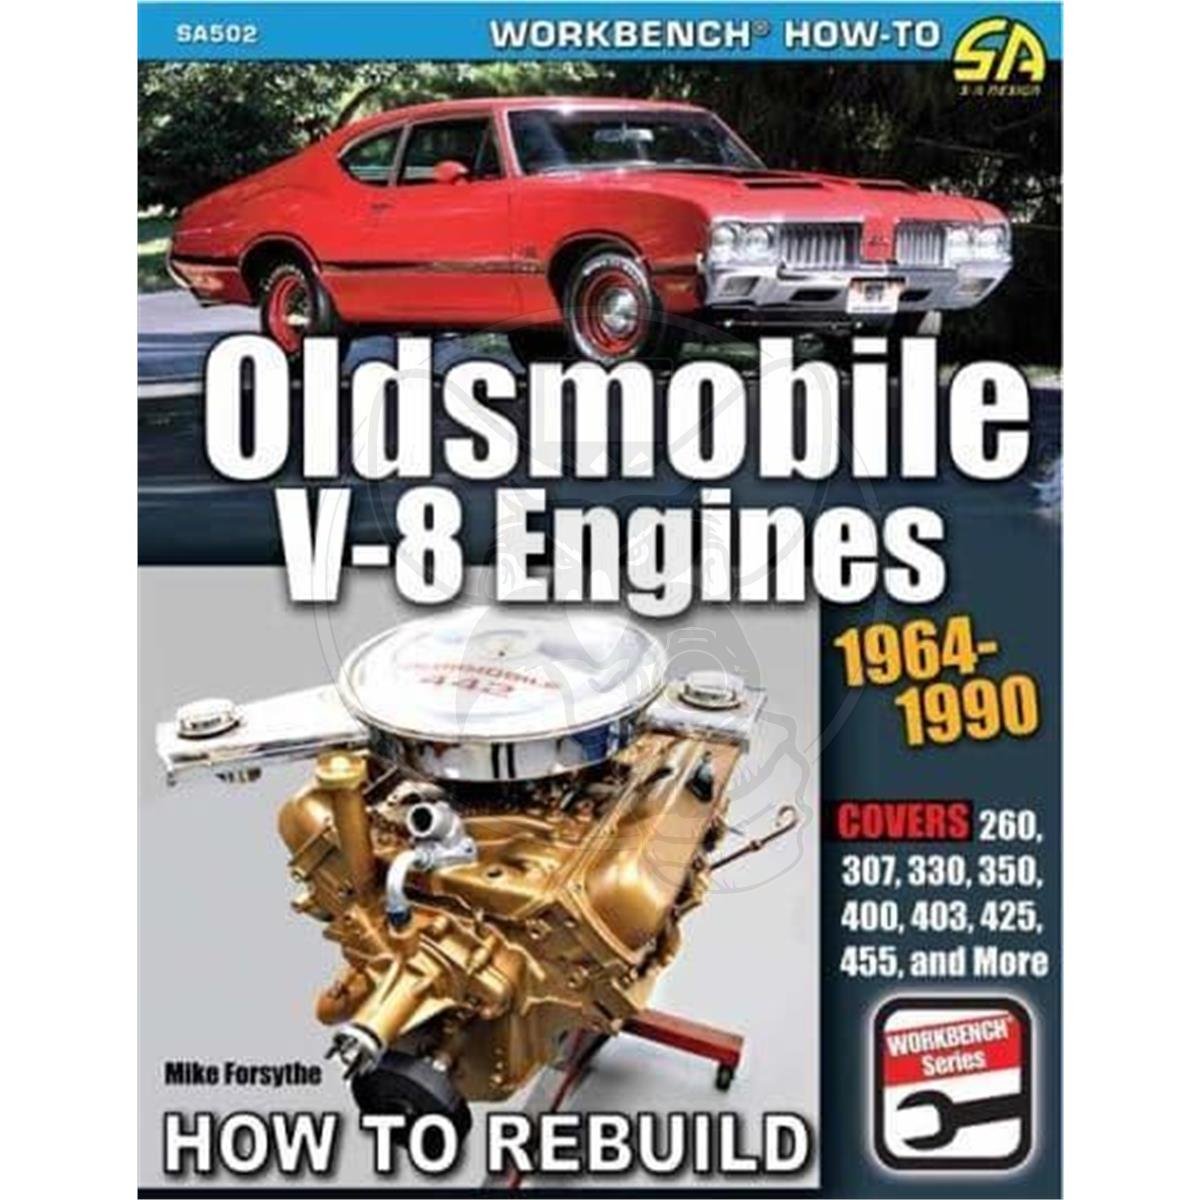 SA DESIGN BOOK "HOW TO REBUILD OLDSMOBILE V8 ENGINES 1964-1990"